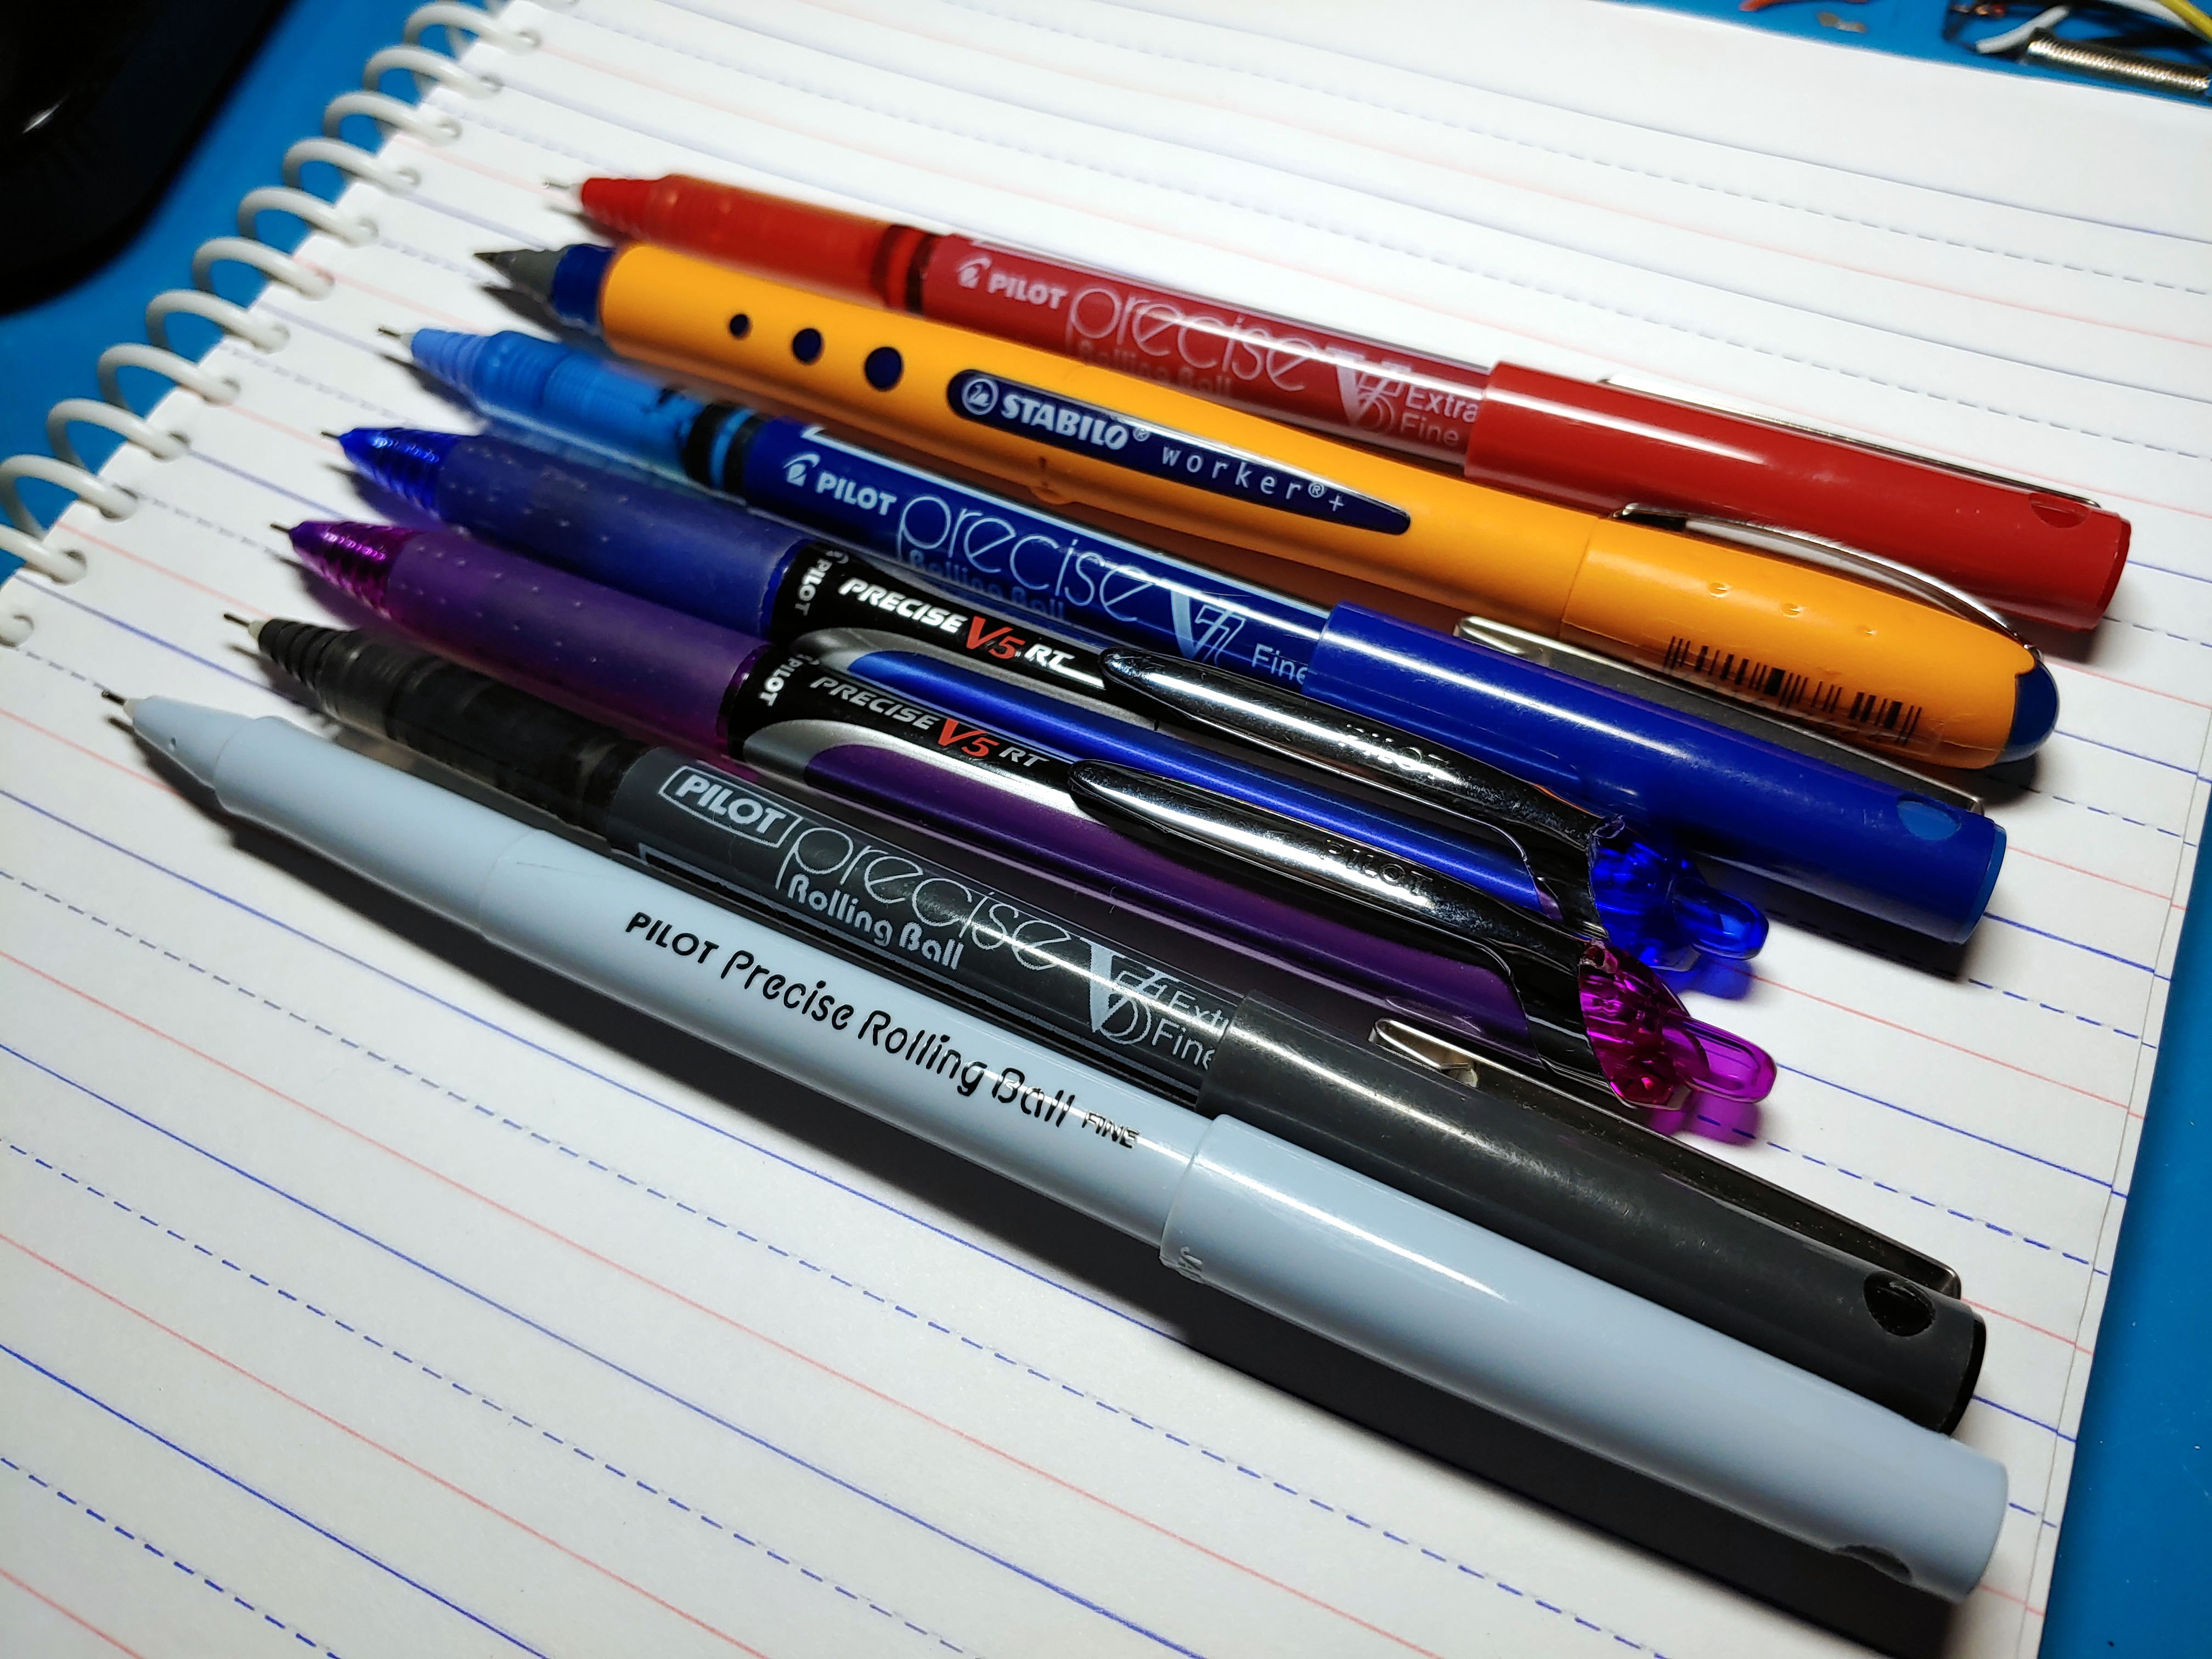 Best pen ever? Reviewing Redditor's top pens from Pilot, Sharpie